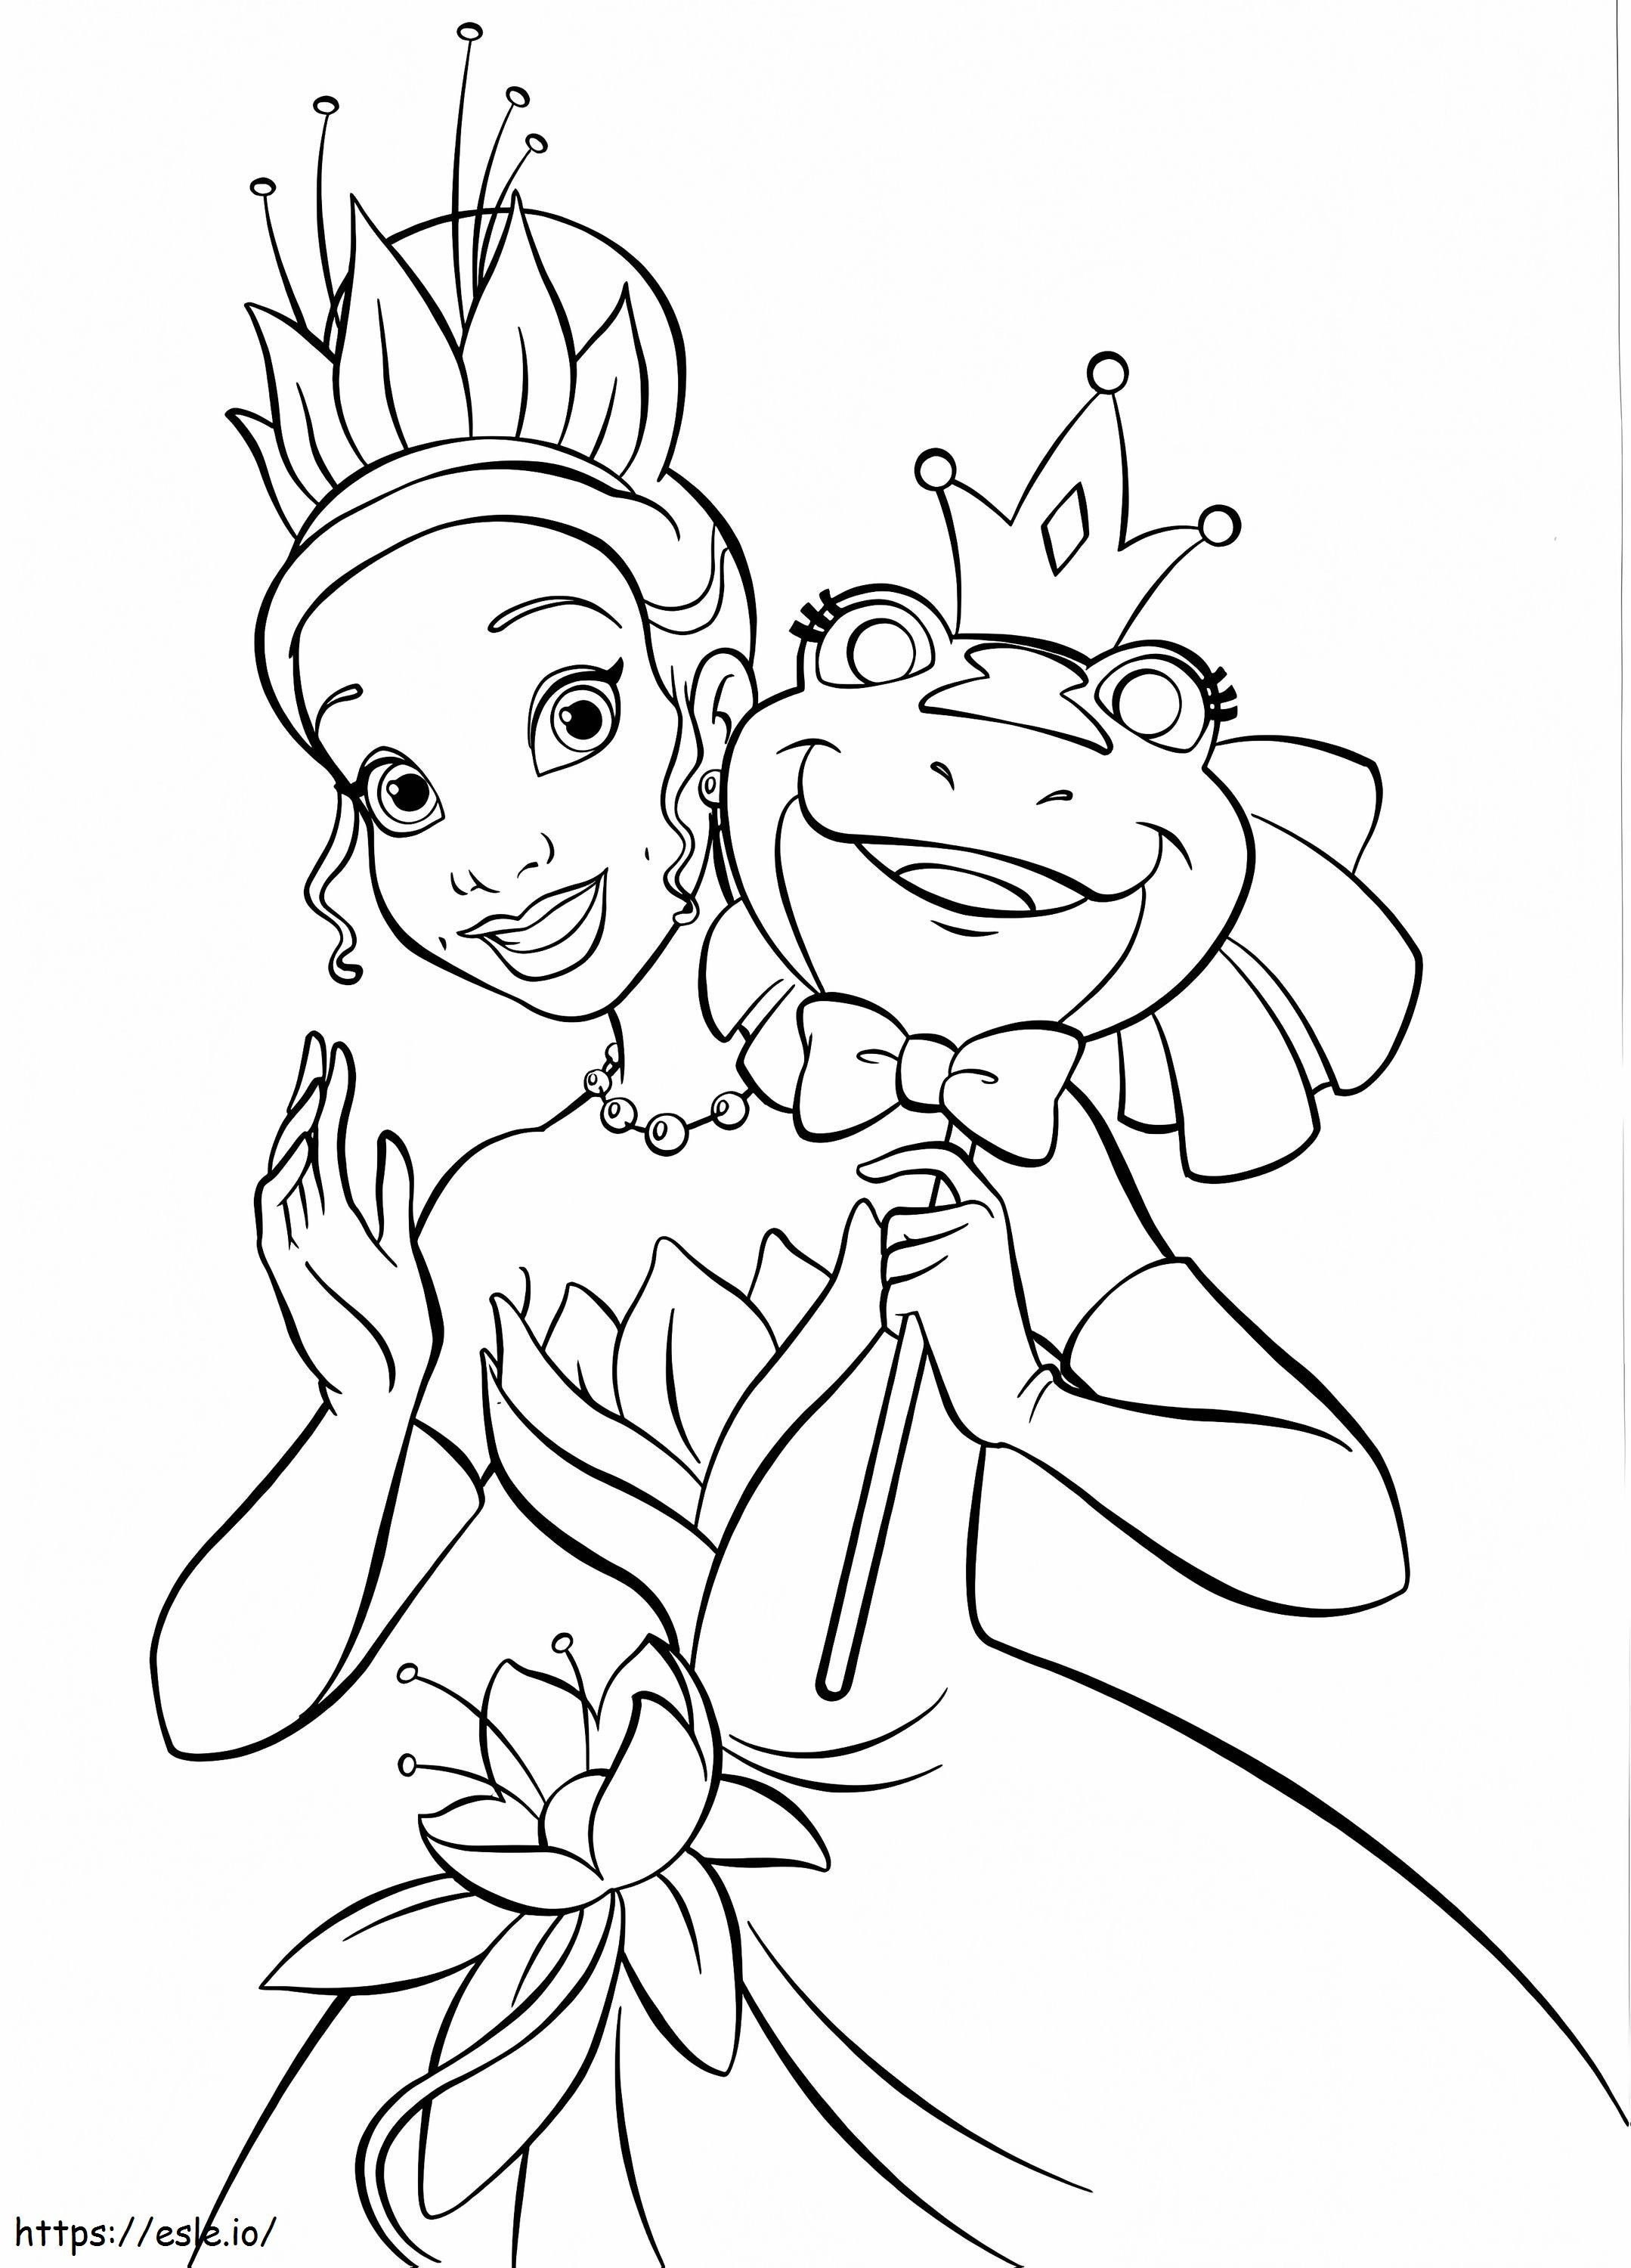 Charming Princess Tiana 2 coloring page